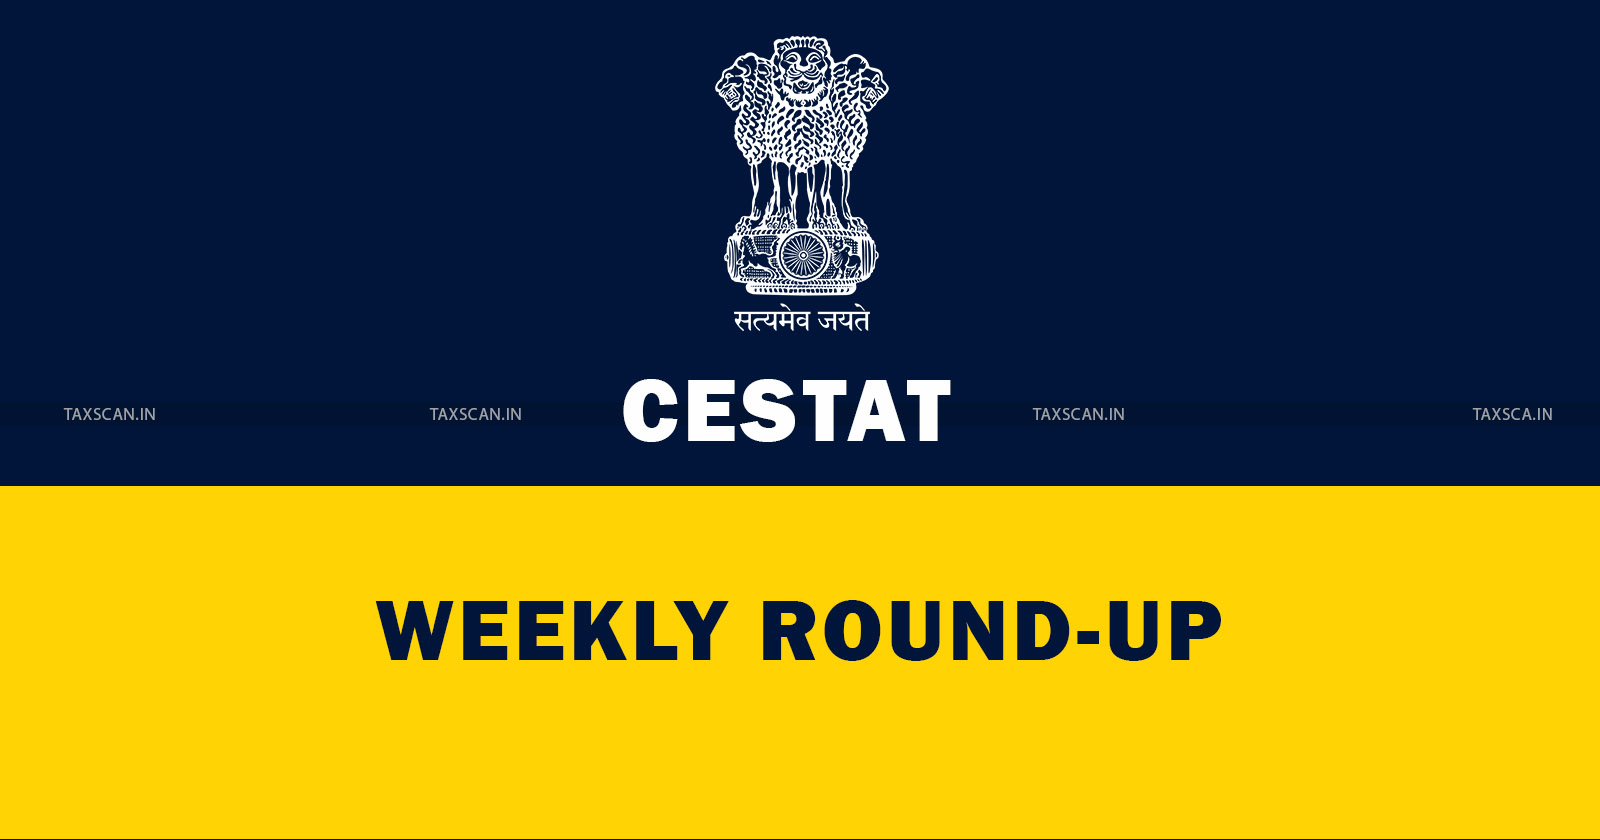 CESTAT Weekly Round Up - CESTAT - Taxscan